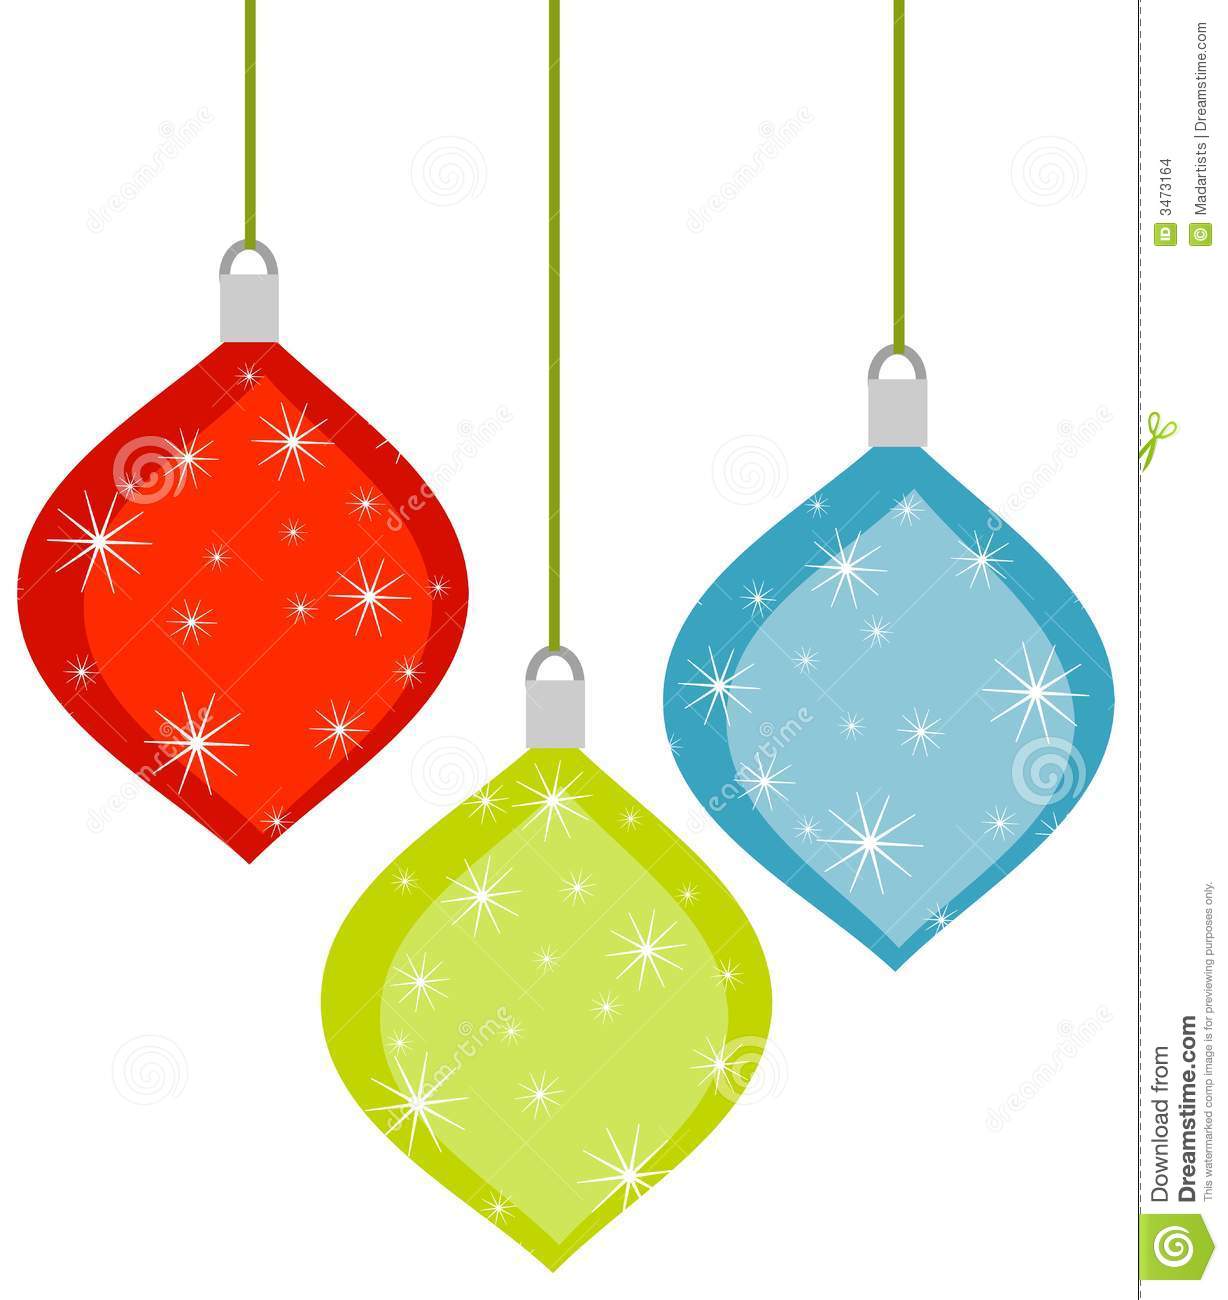 65+ Christmas Ornaments Images Clip Art.